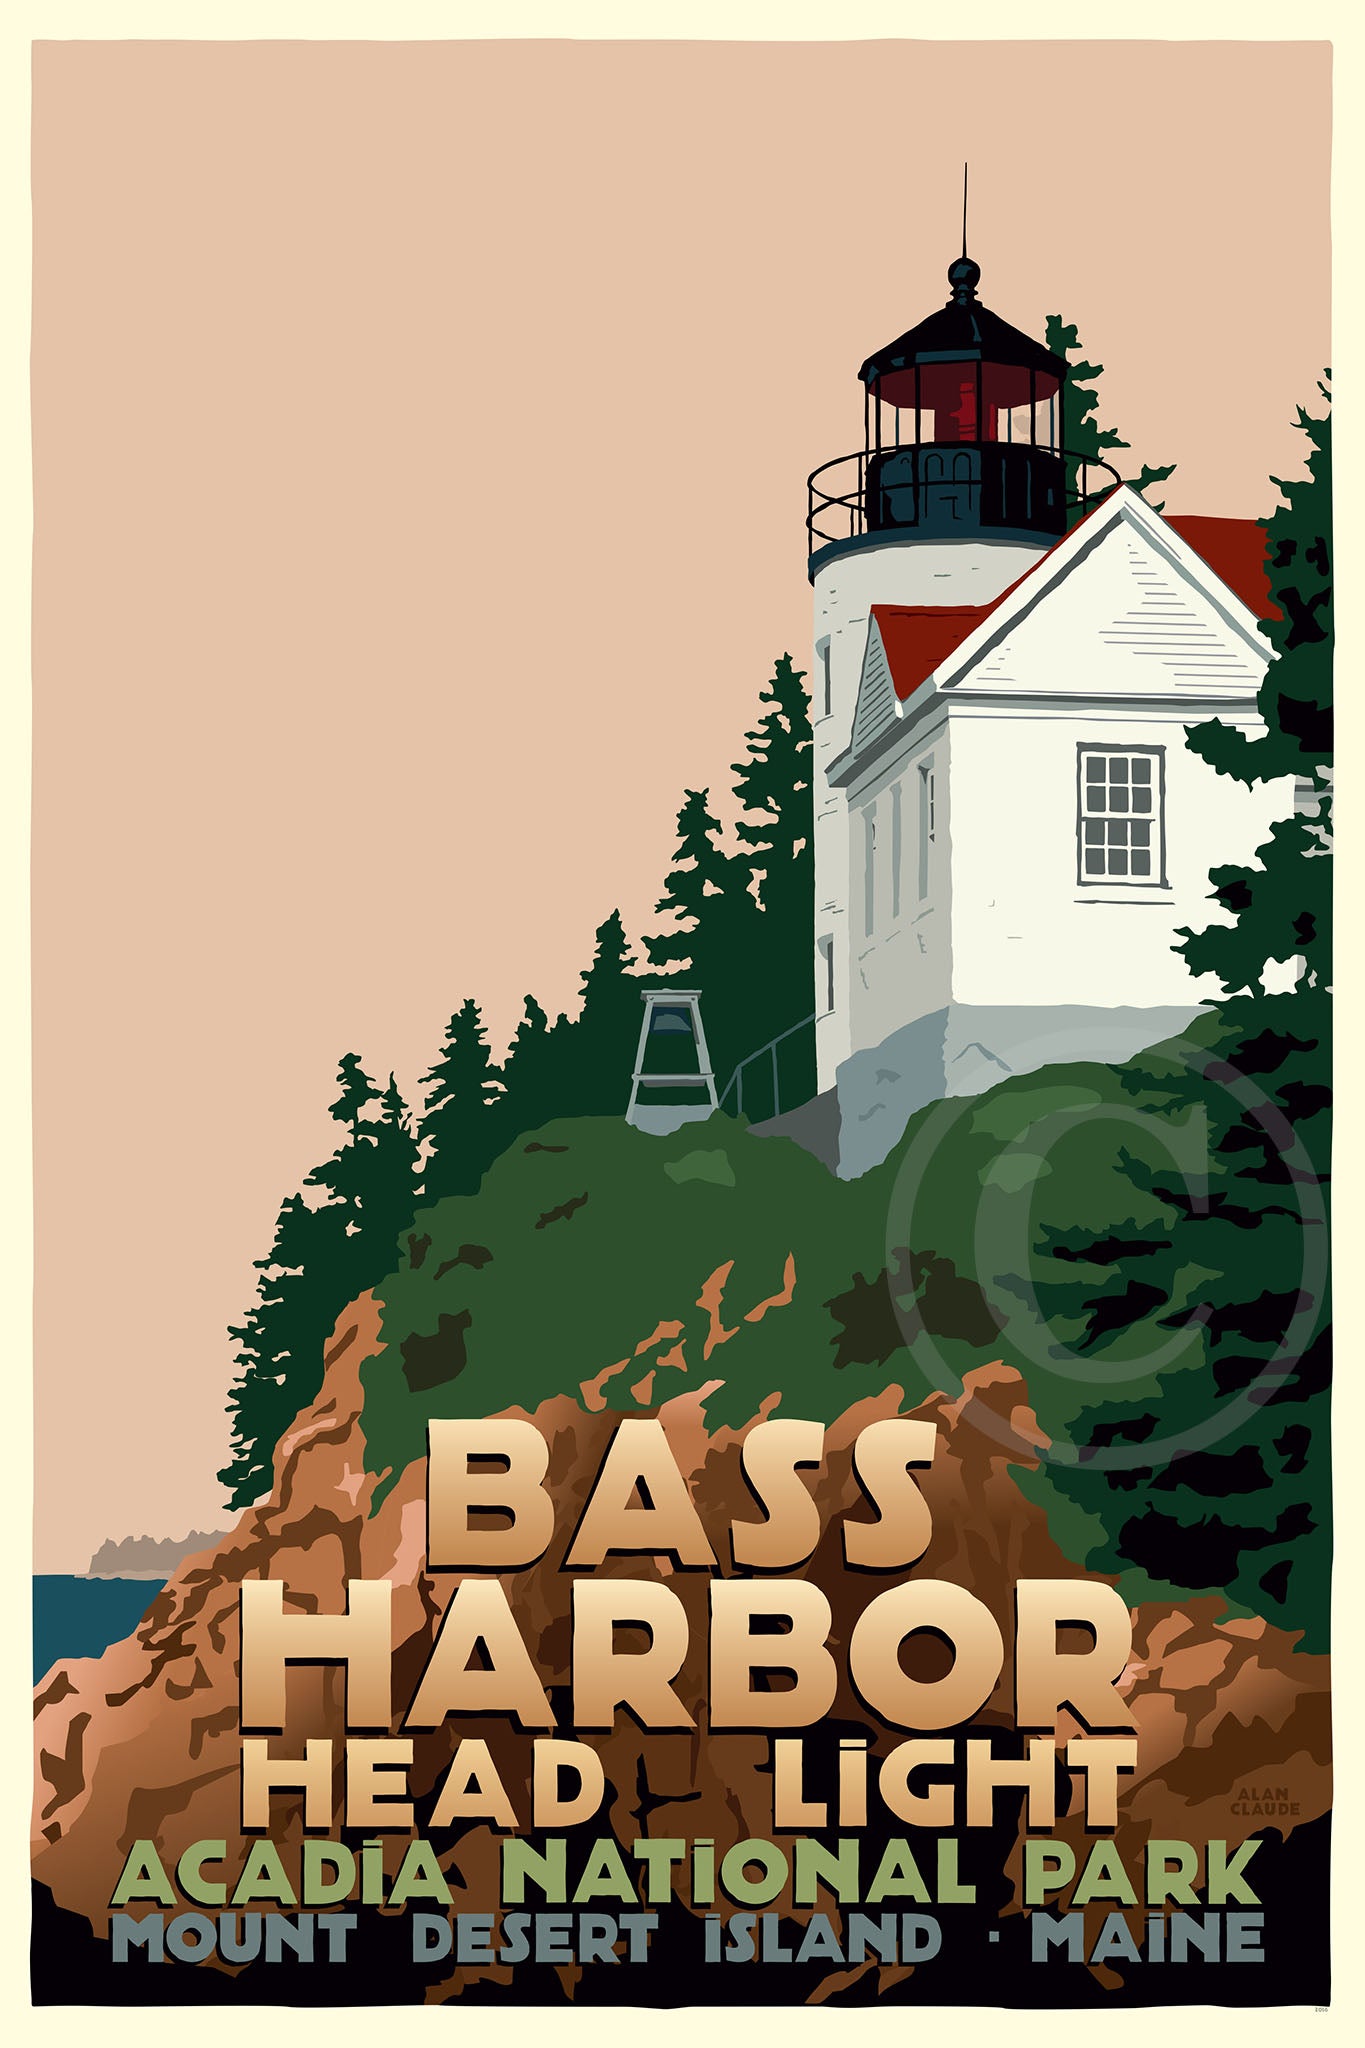 Bass Harbor Head Light Art Print 36" x 53" Travel Poster By Alan Claude - Maine